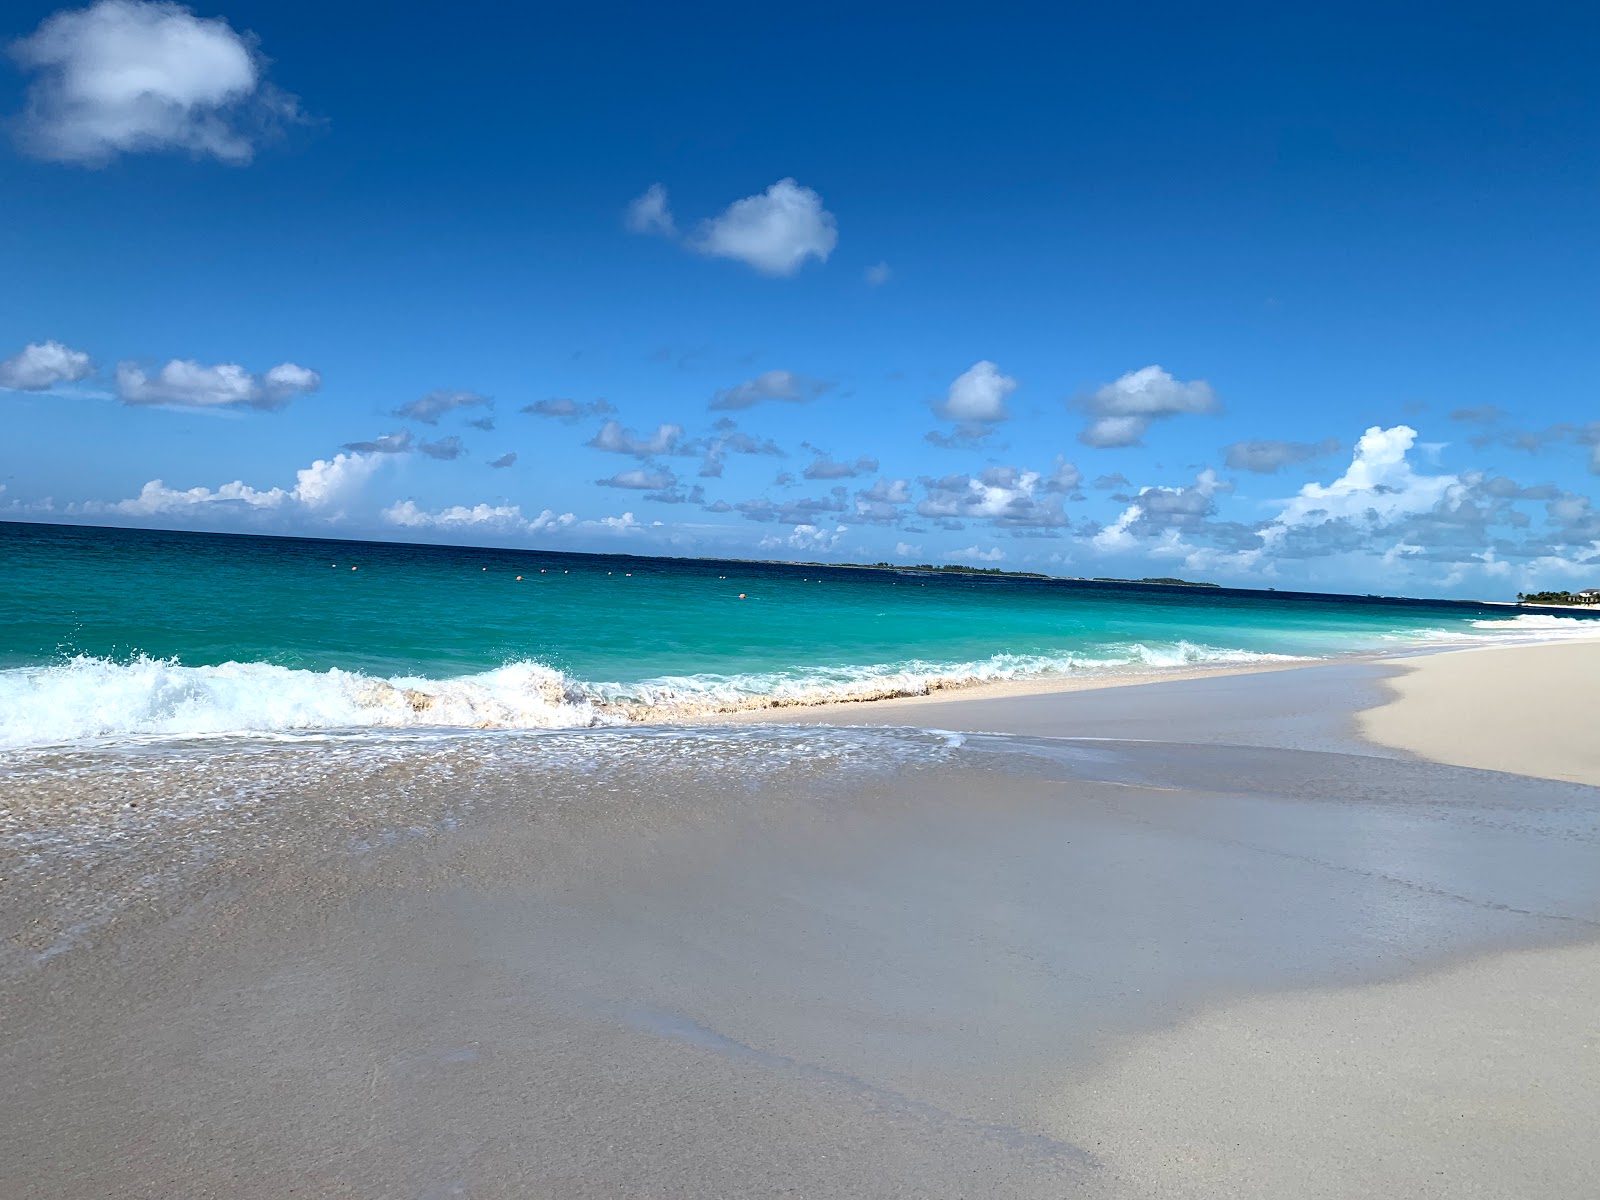 Foto de Paradise beach - lugar popular entre os apreciadores de relaxamento